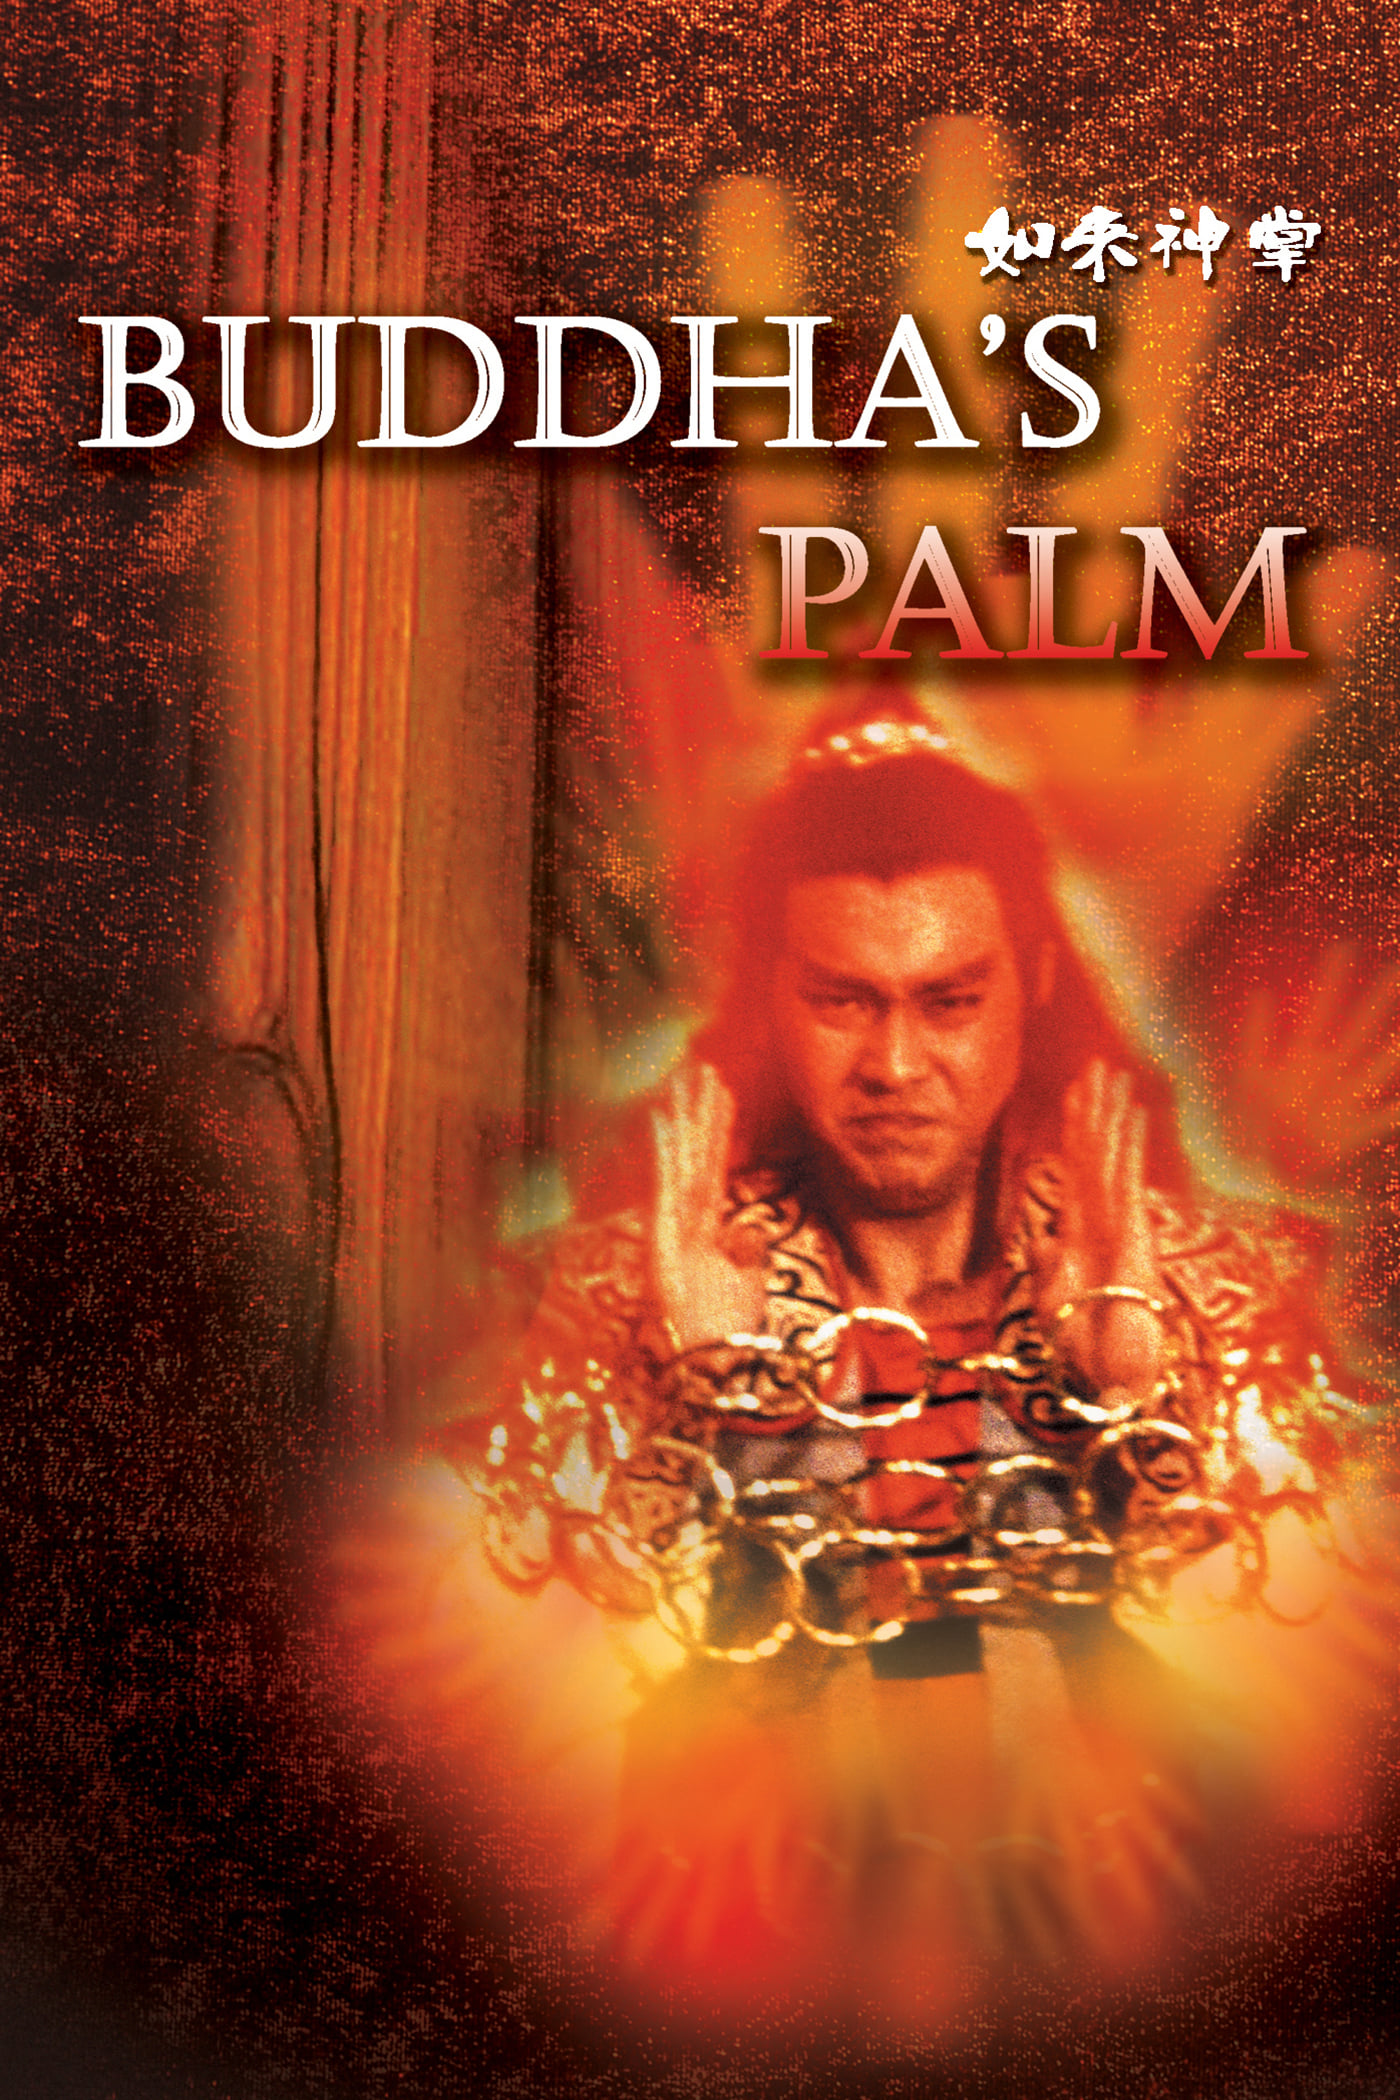 Buddha's Palm streaming